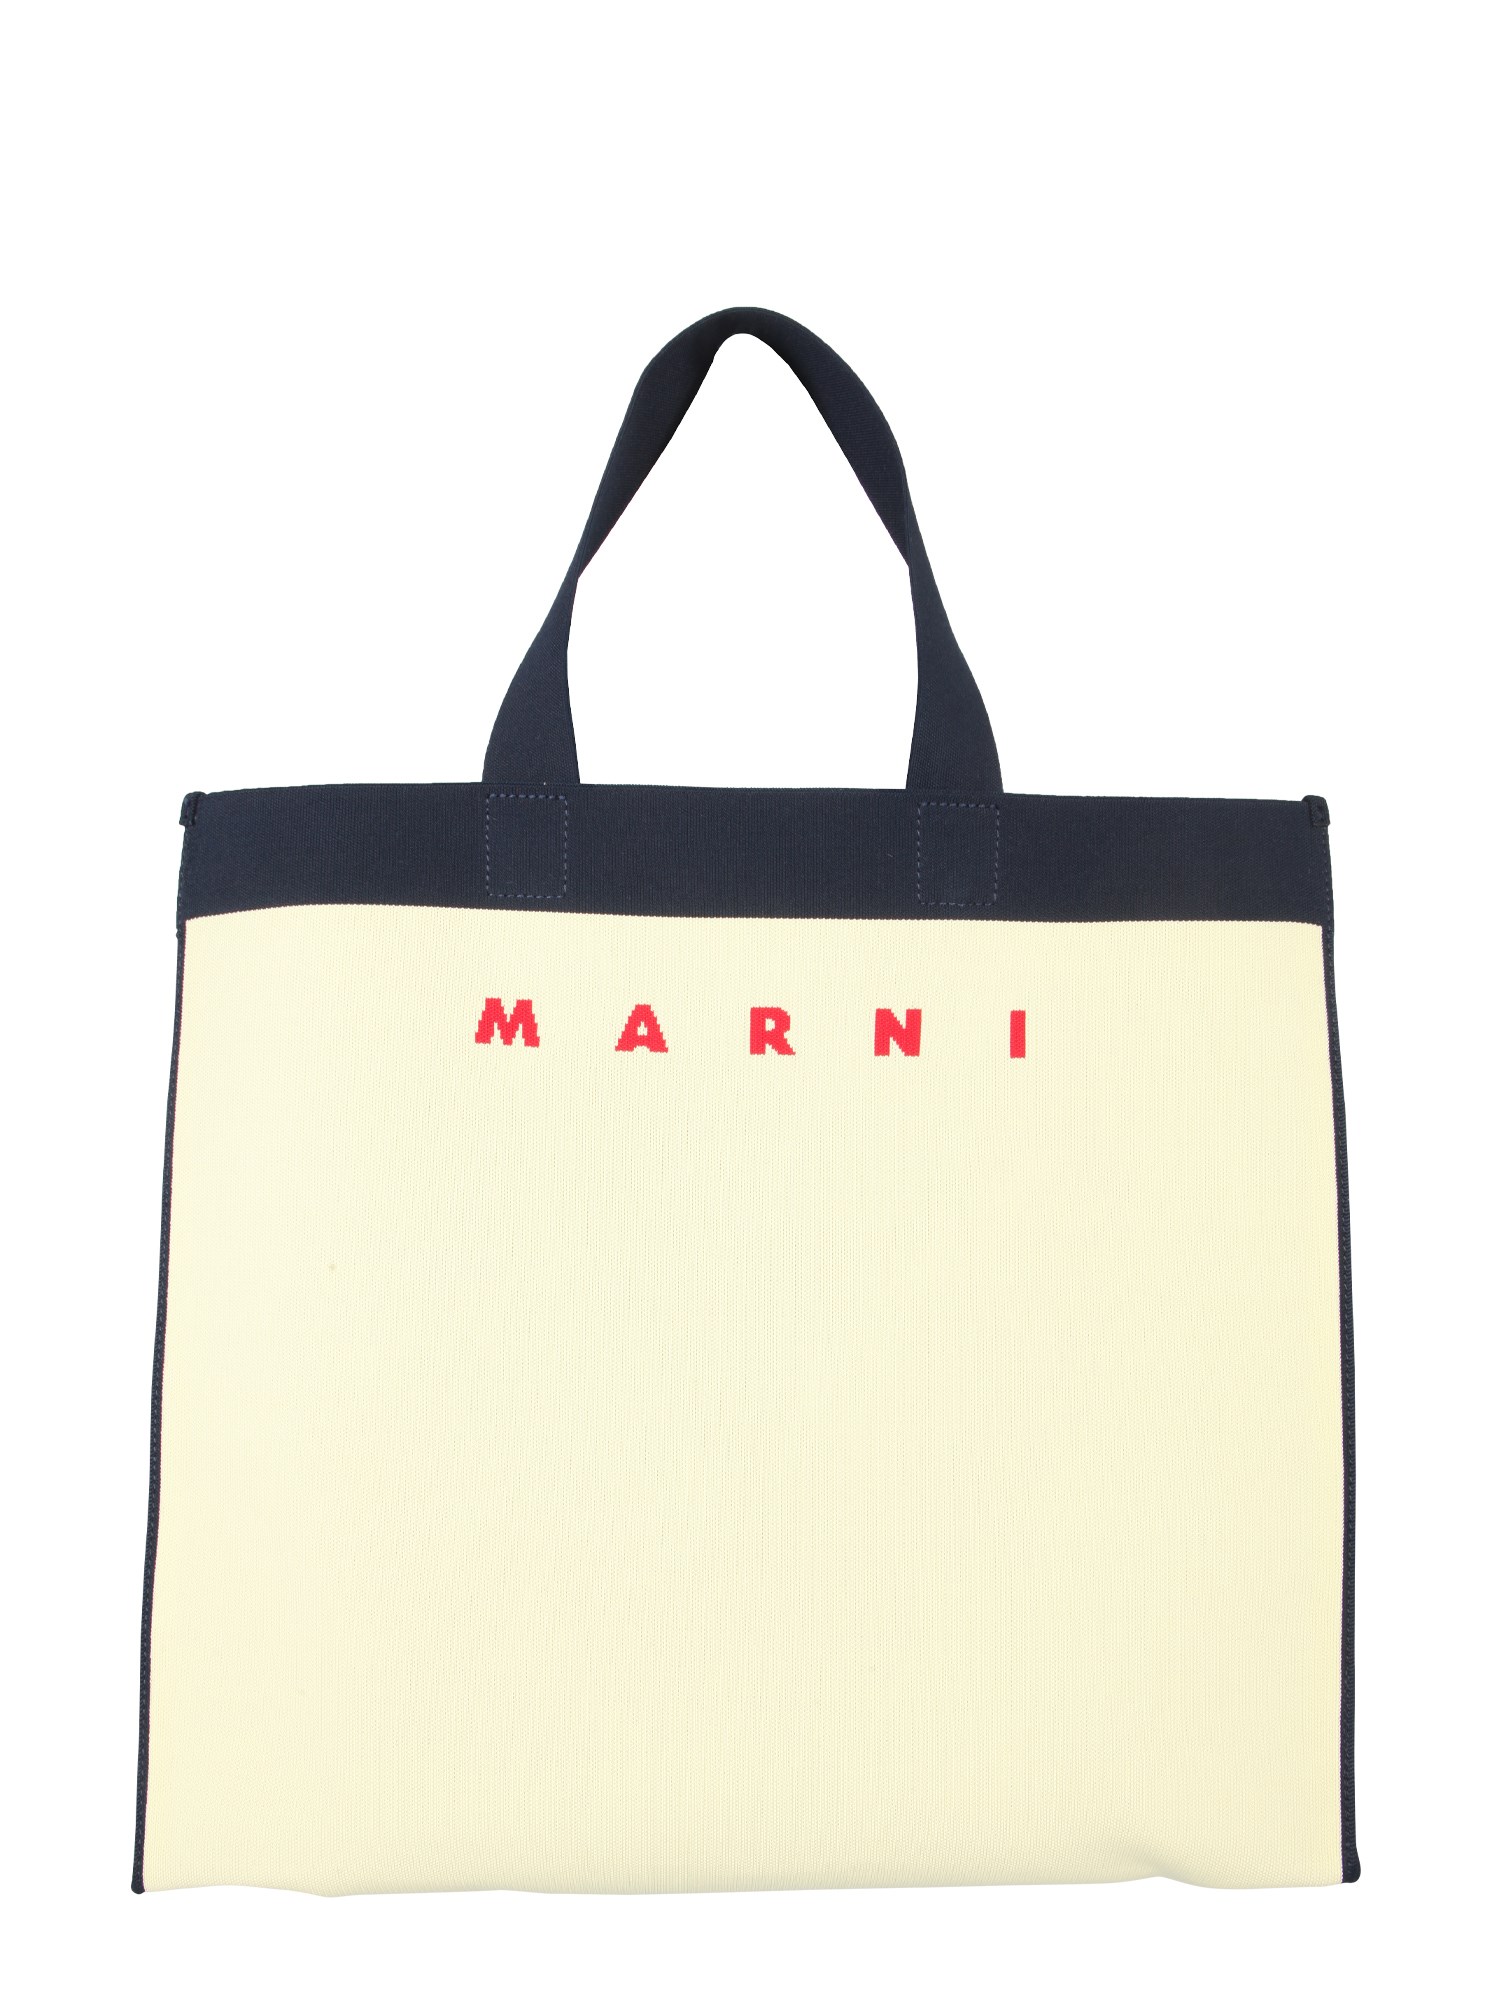 marni shopping bag with logo